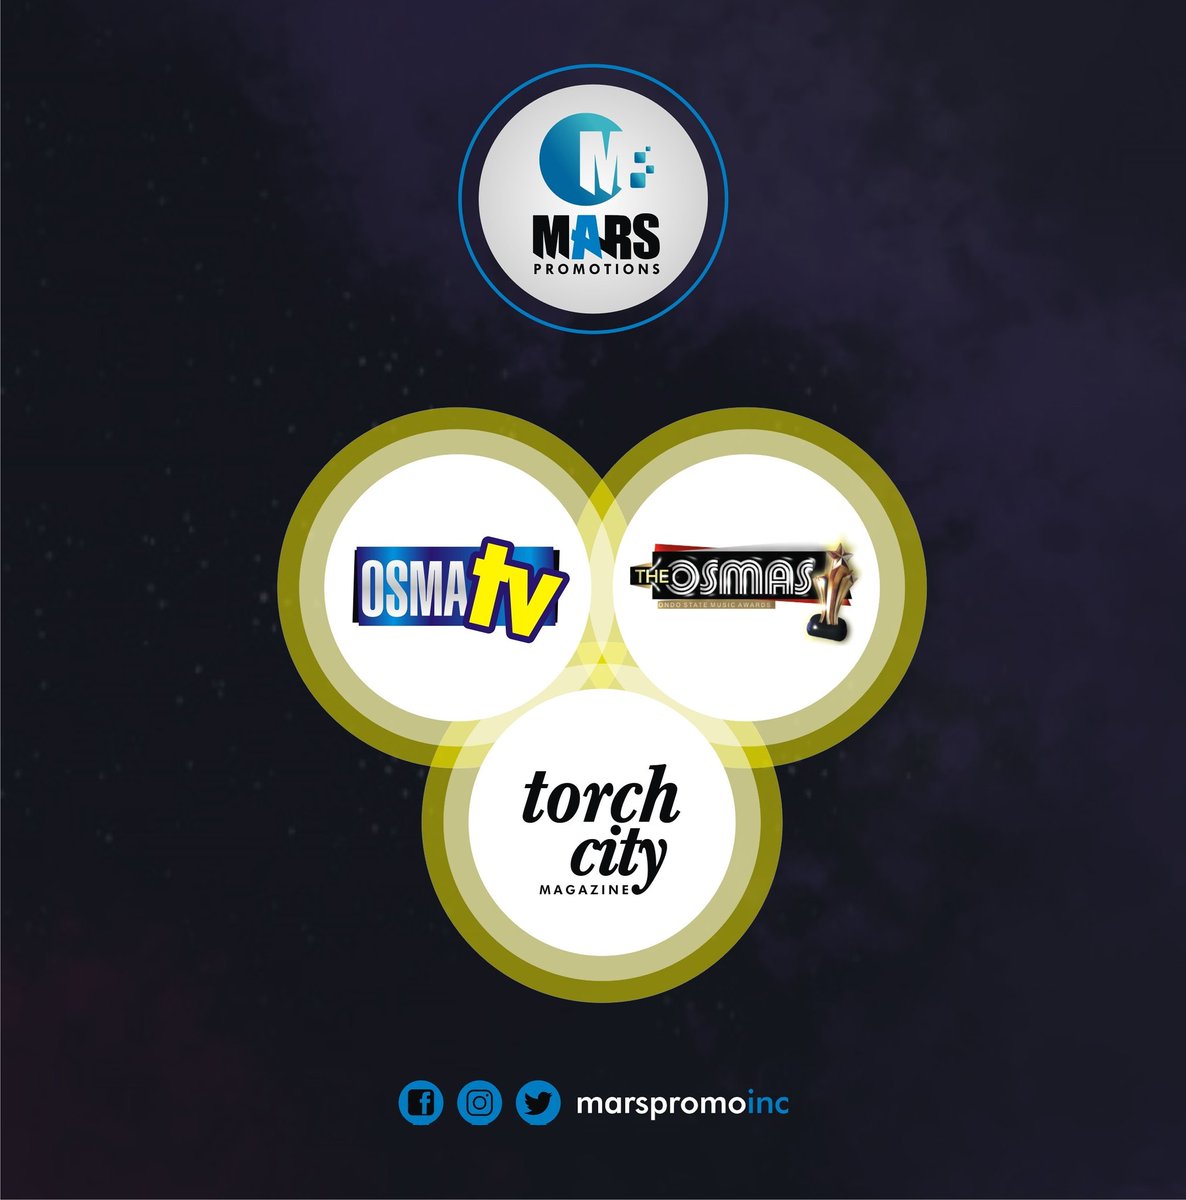 Everything Mars Promotions!
#TheOSMAs
#OSMATV
#Torchcitymag